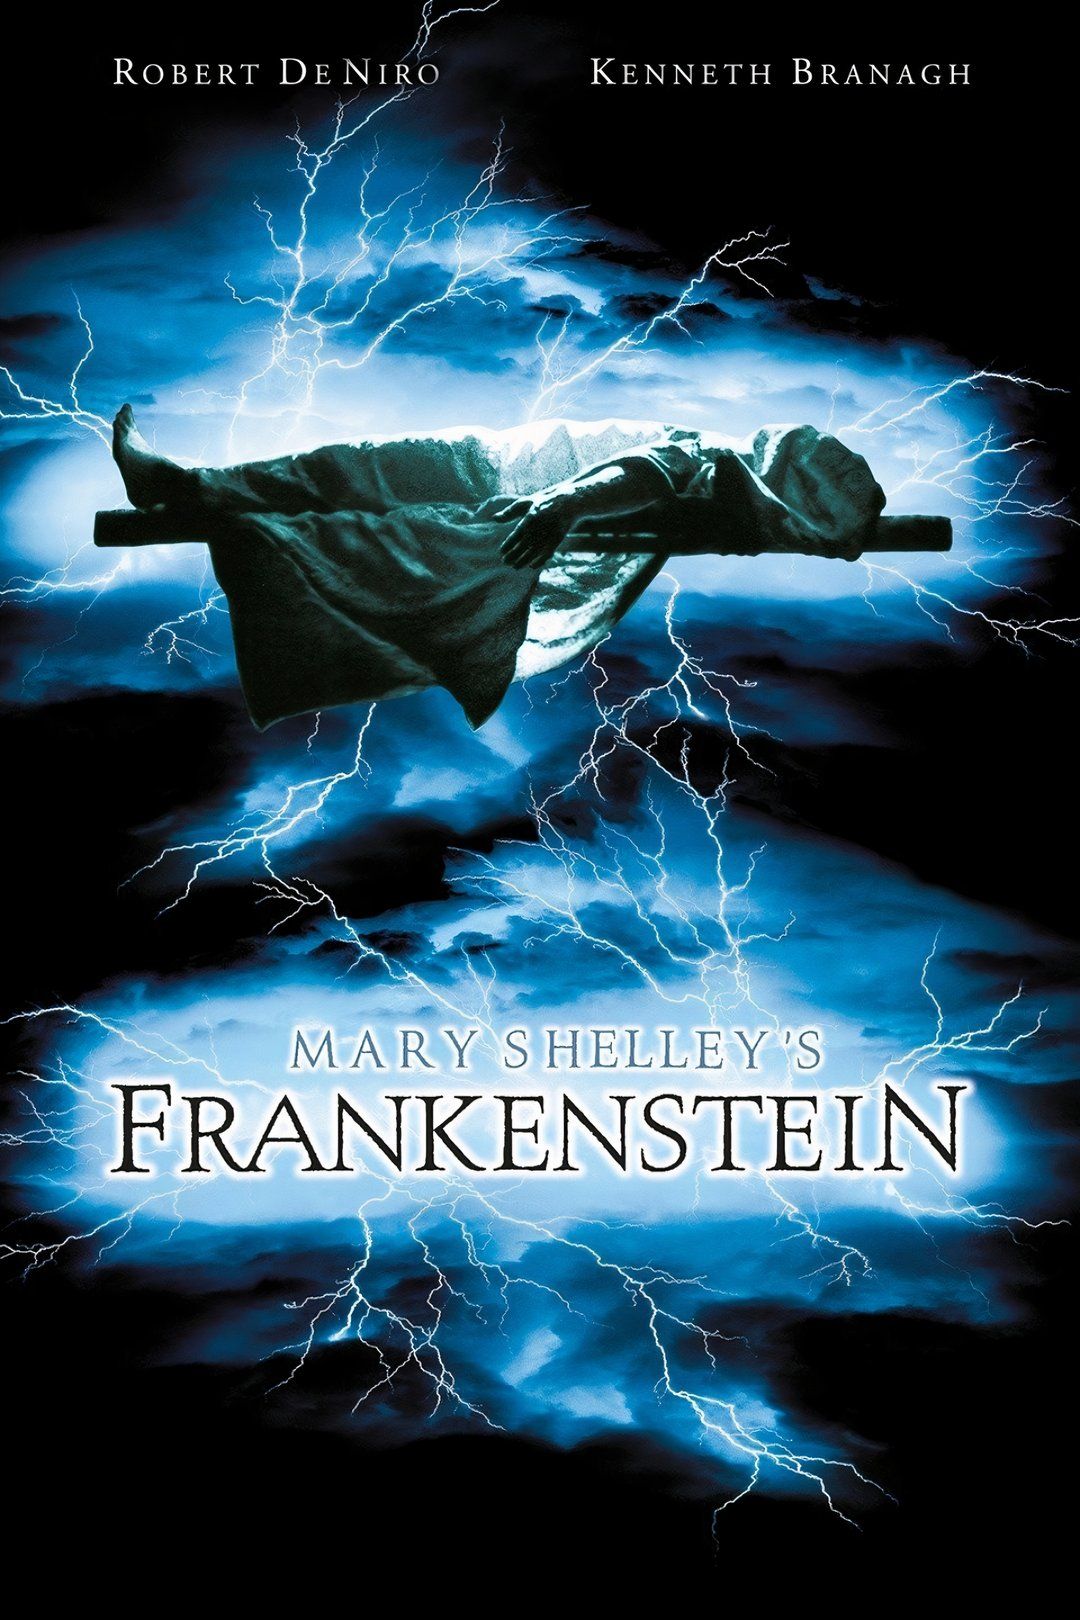 Mary Shelley's Frankenstein 1994 movie poster